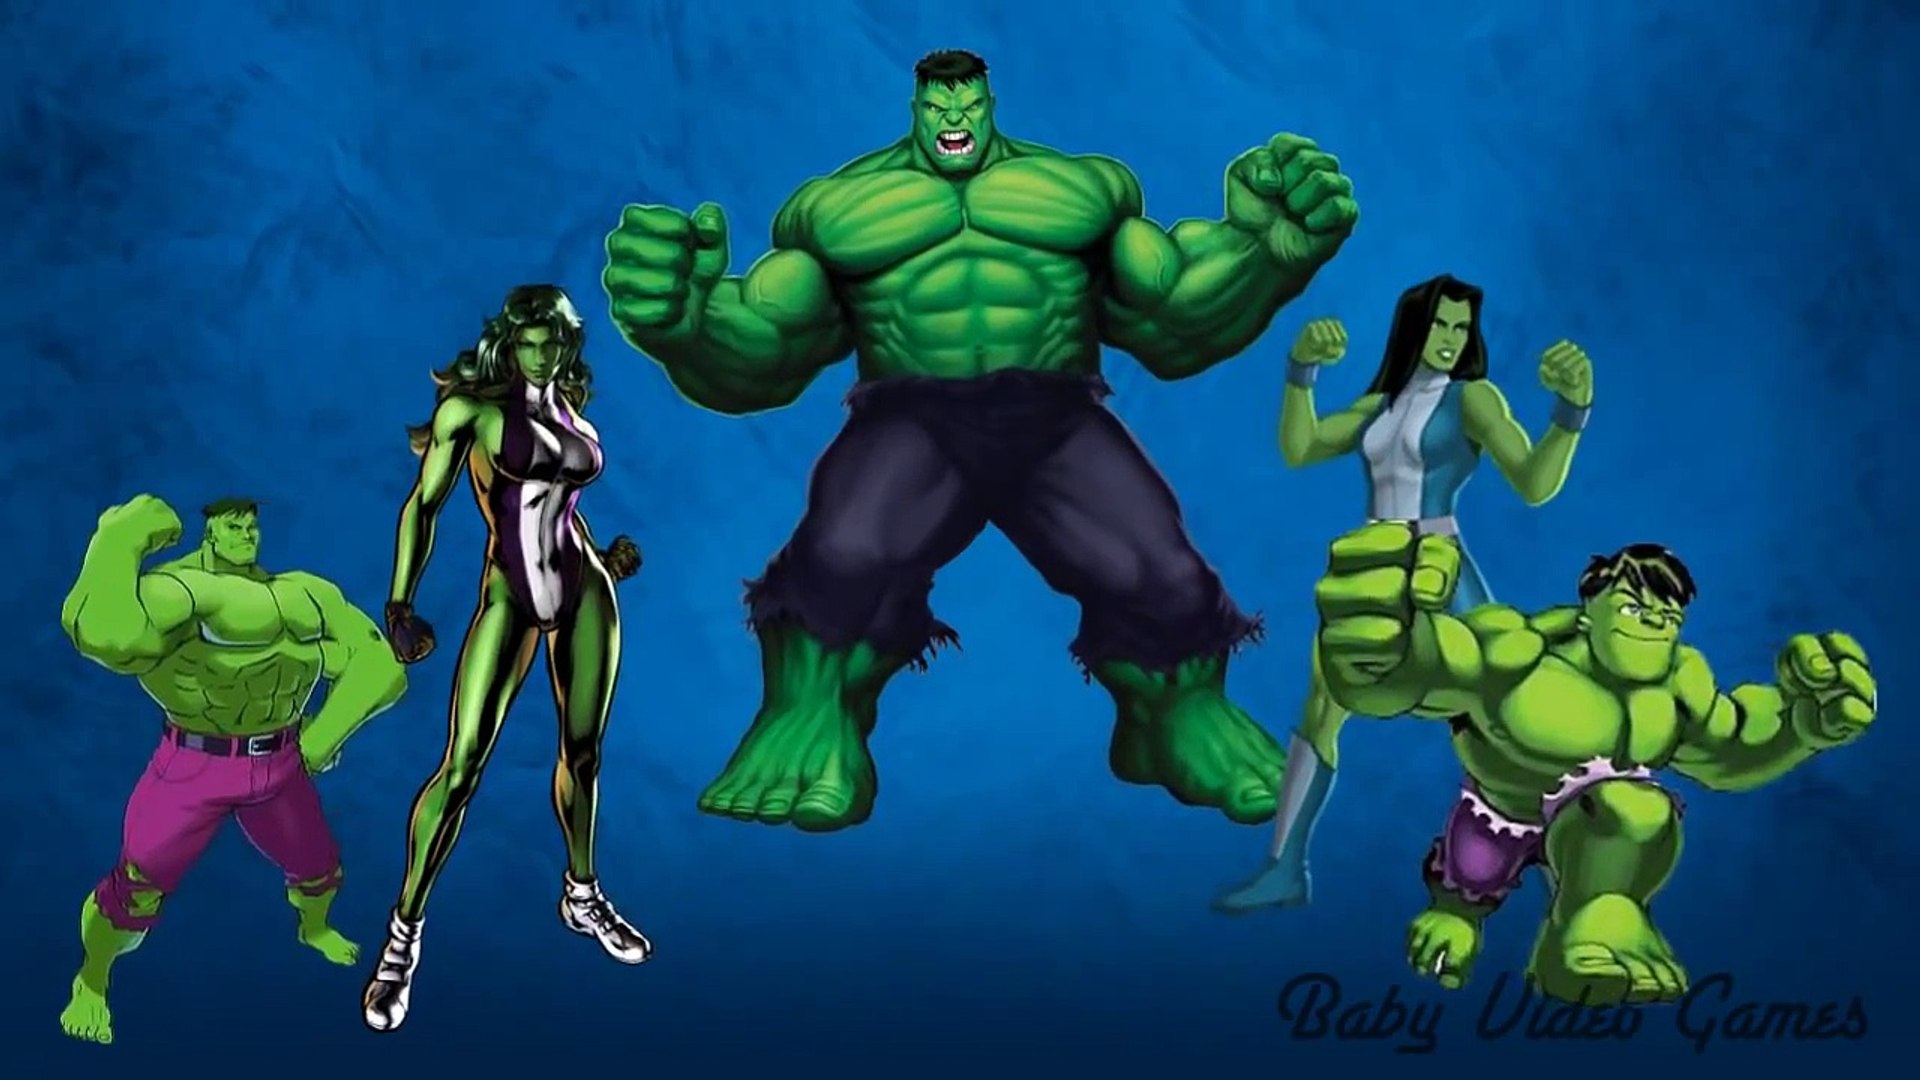 Hulk SuperHero Cartoon - Cartoons for Kids and Children - Cartoon Song Hulk  - video Dailymotion